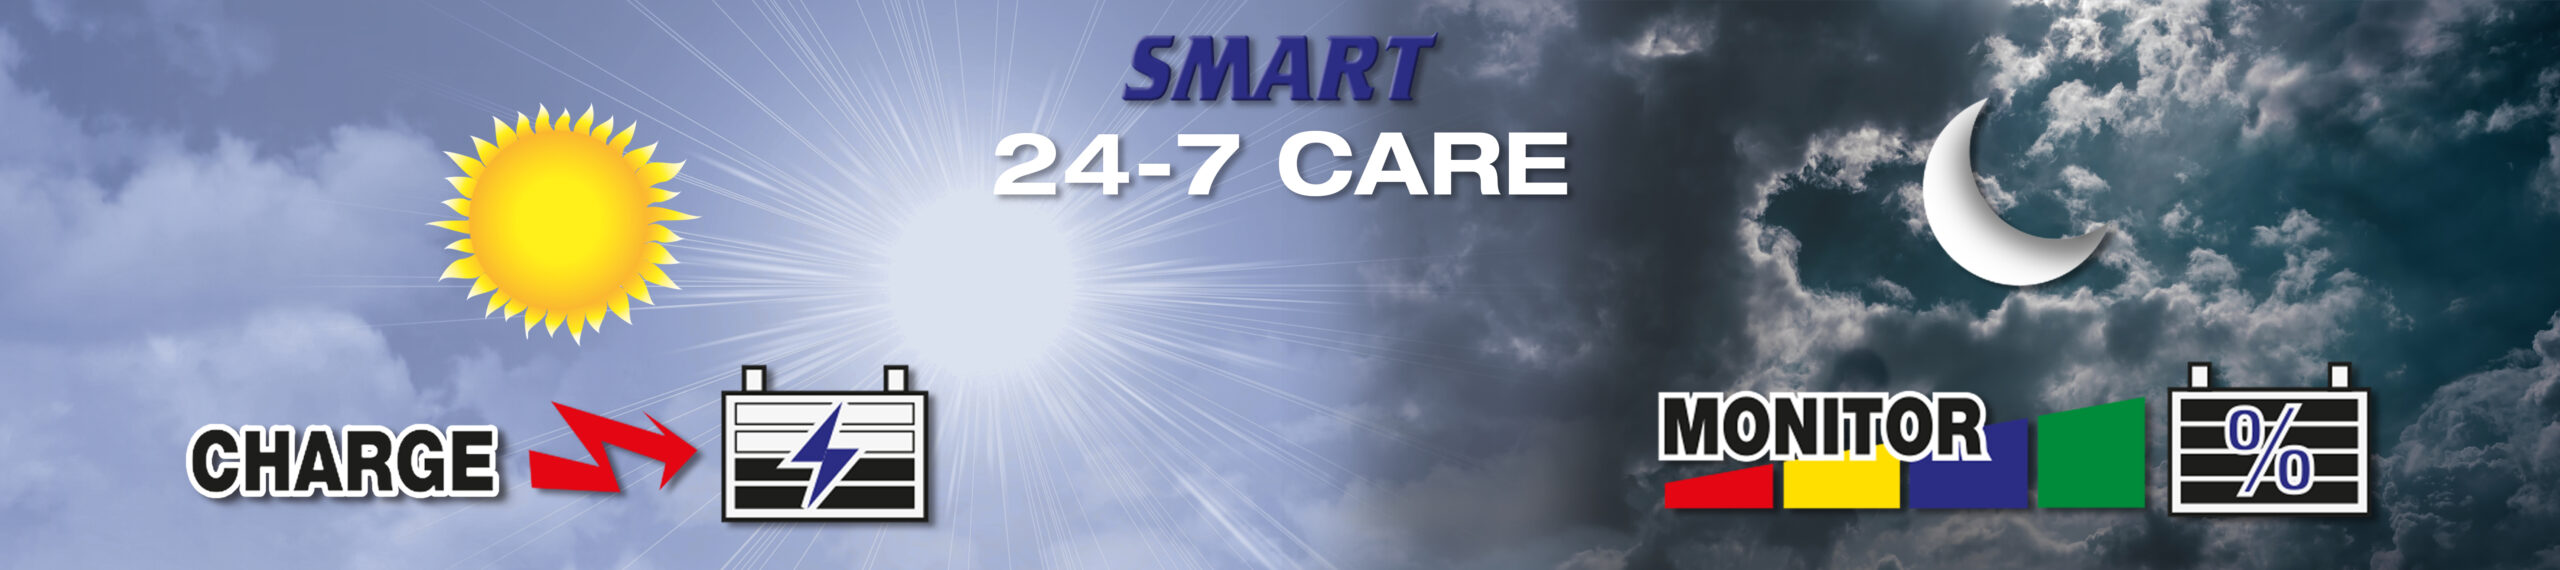 smarte 24-7 Pflege am Solar Ladegerät